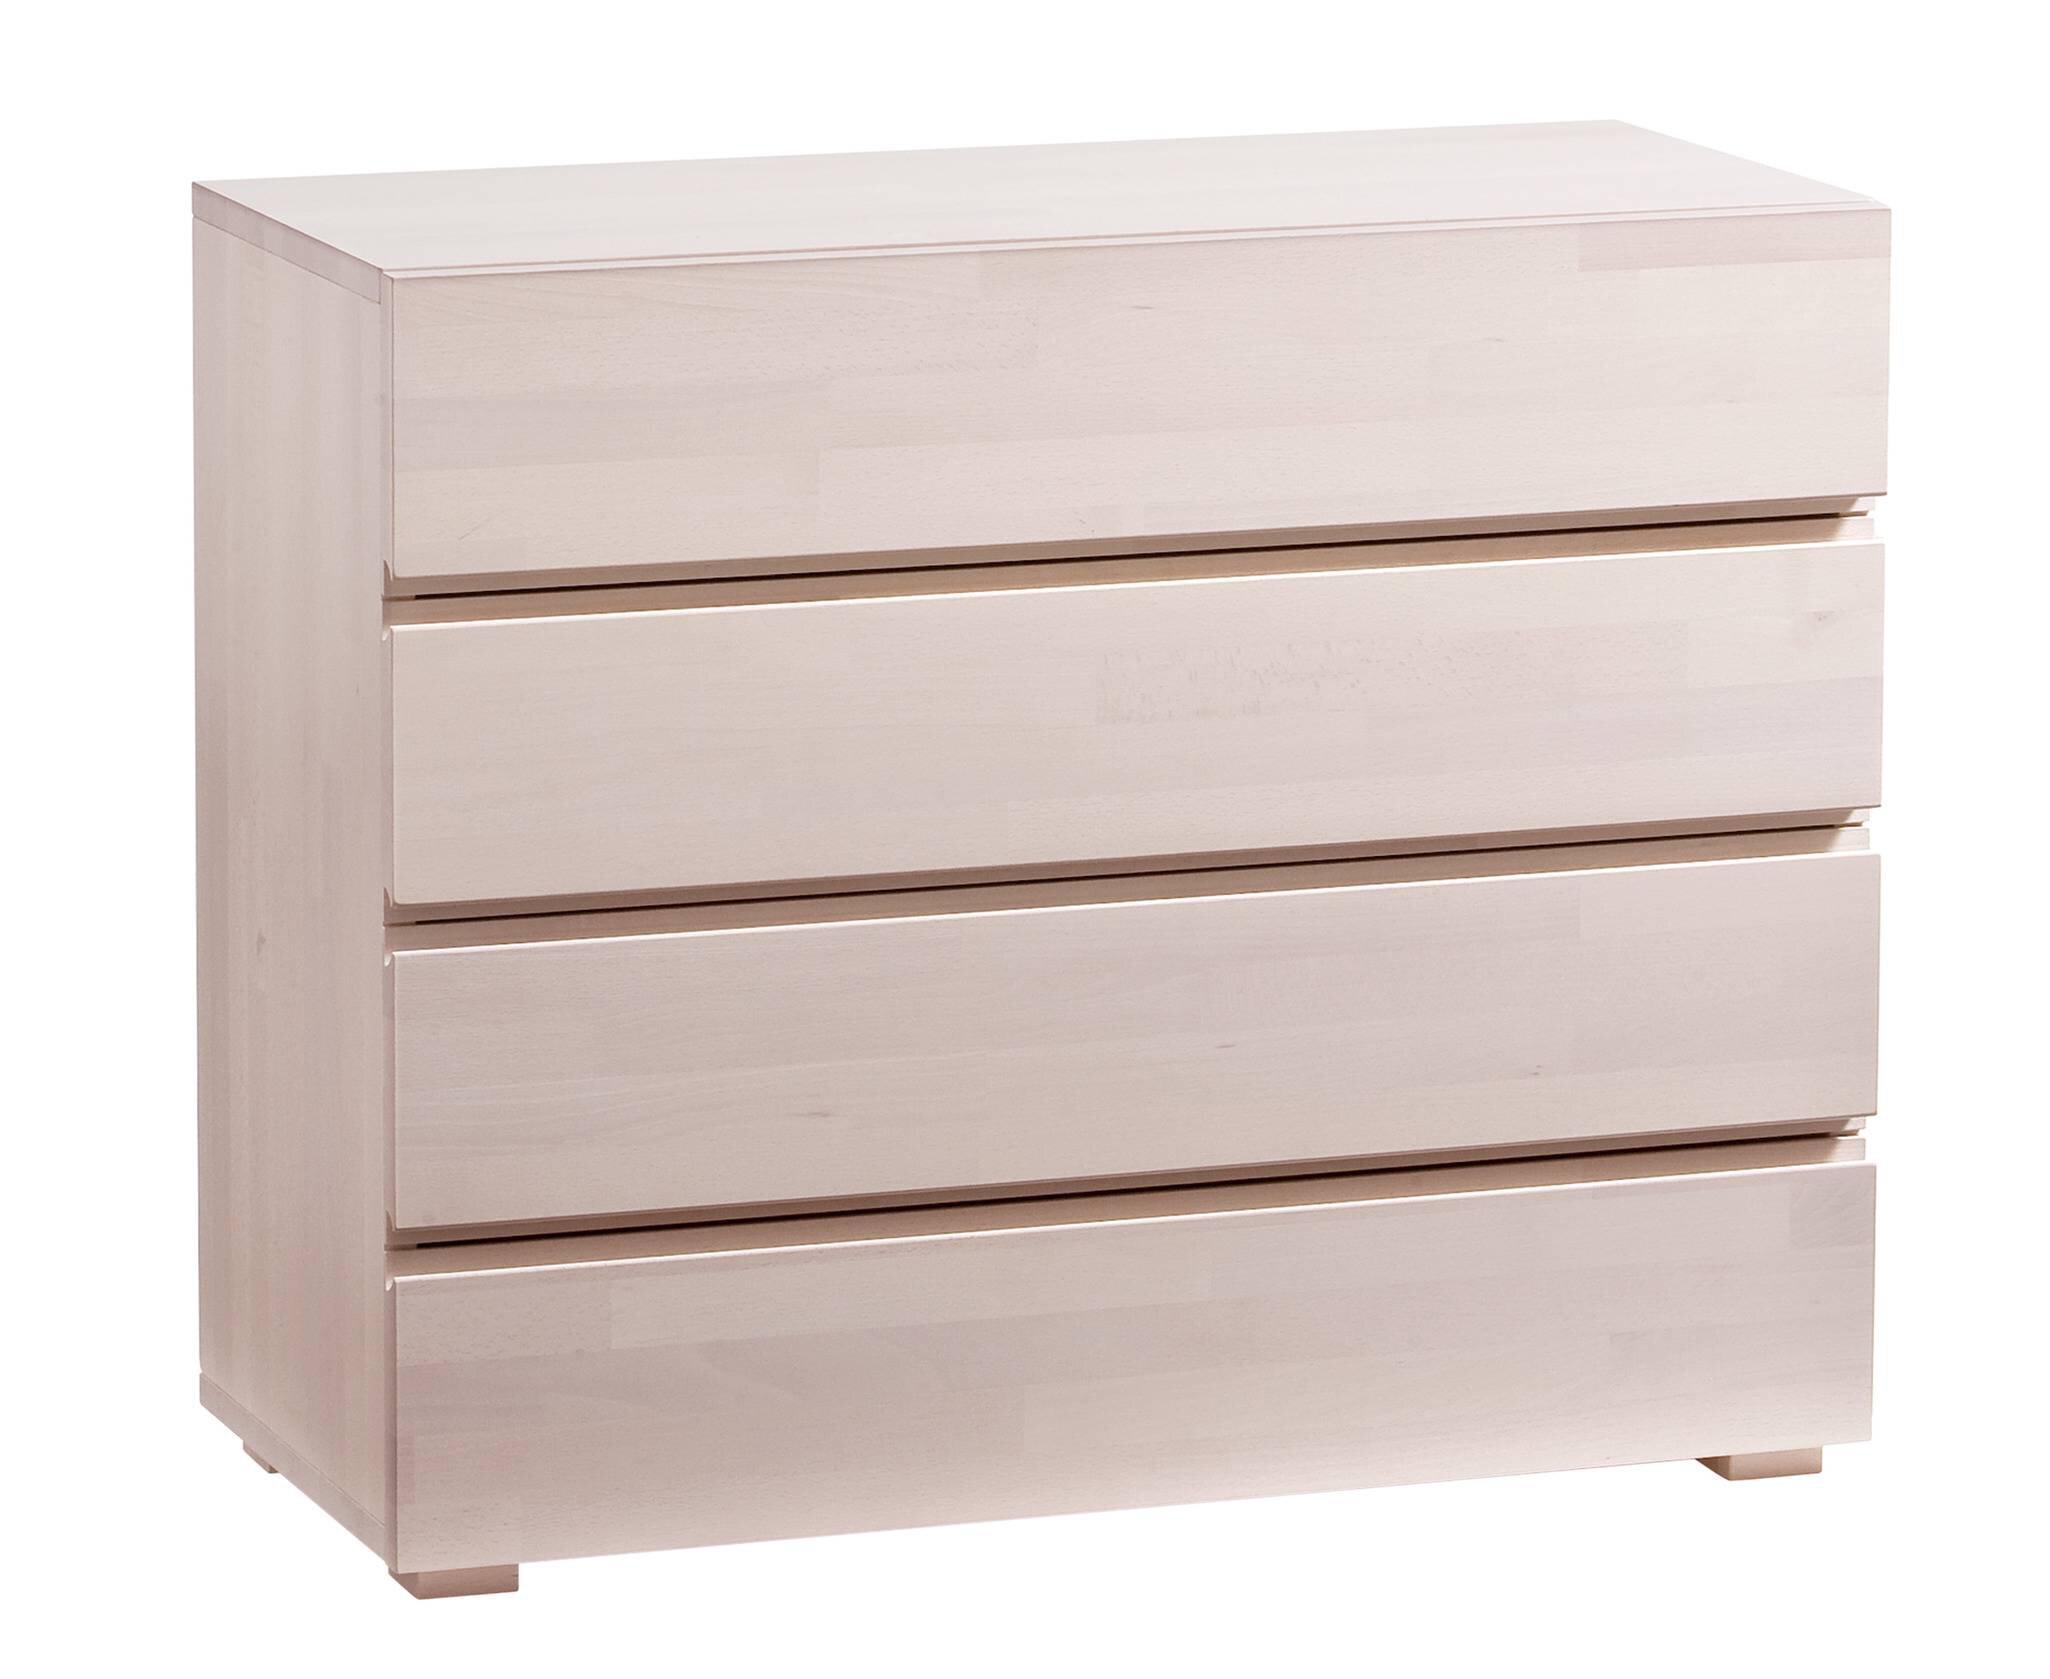 Lovara chest of drawers